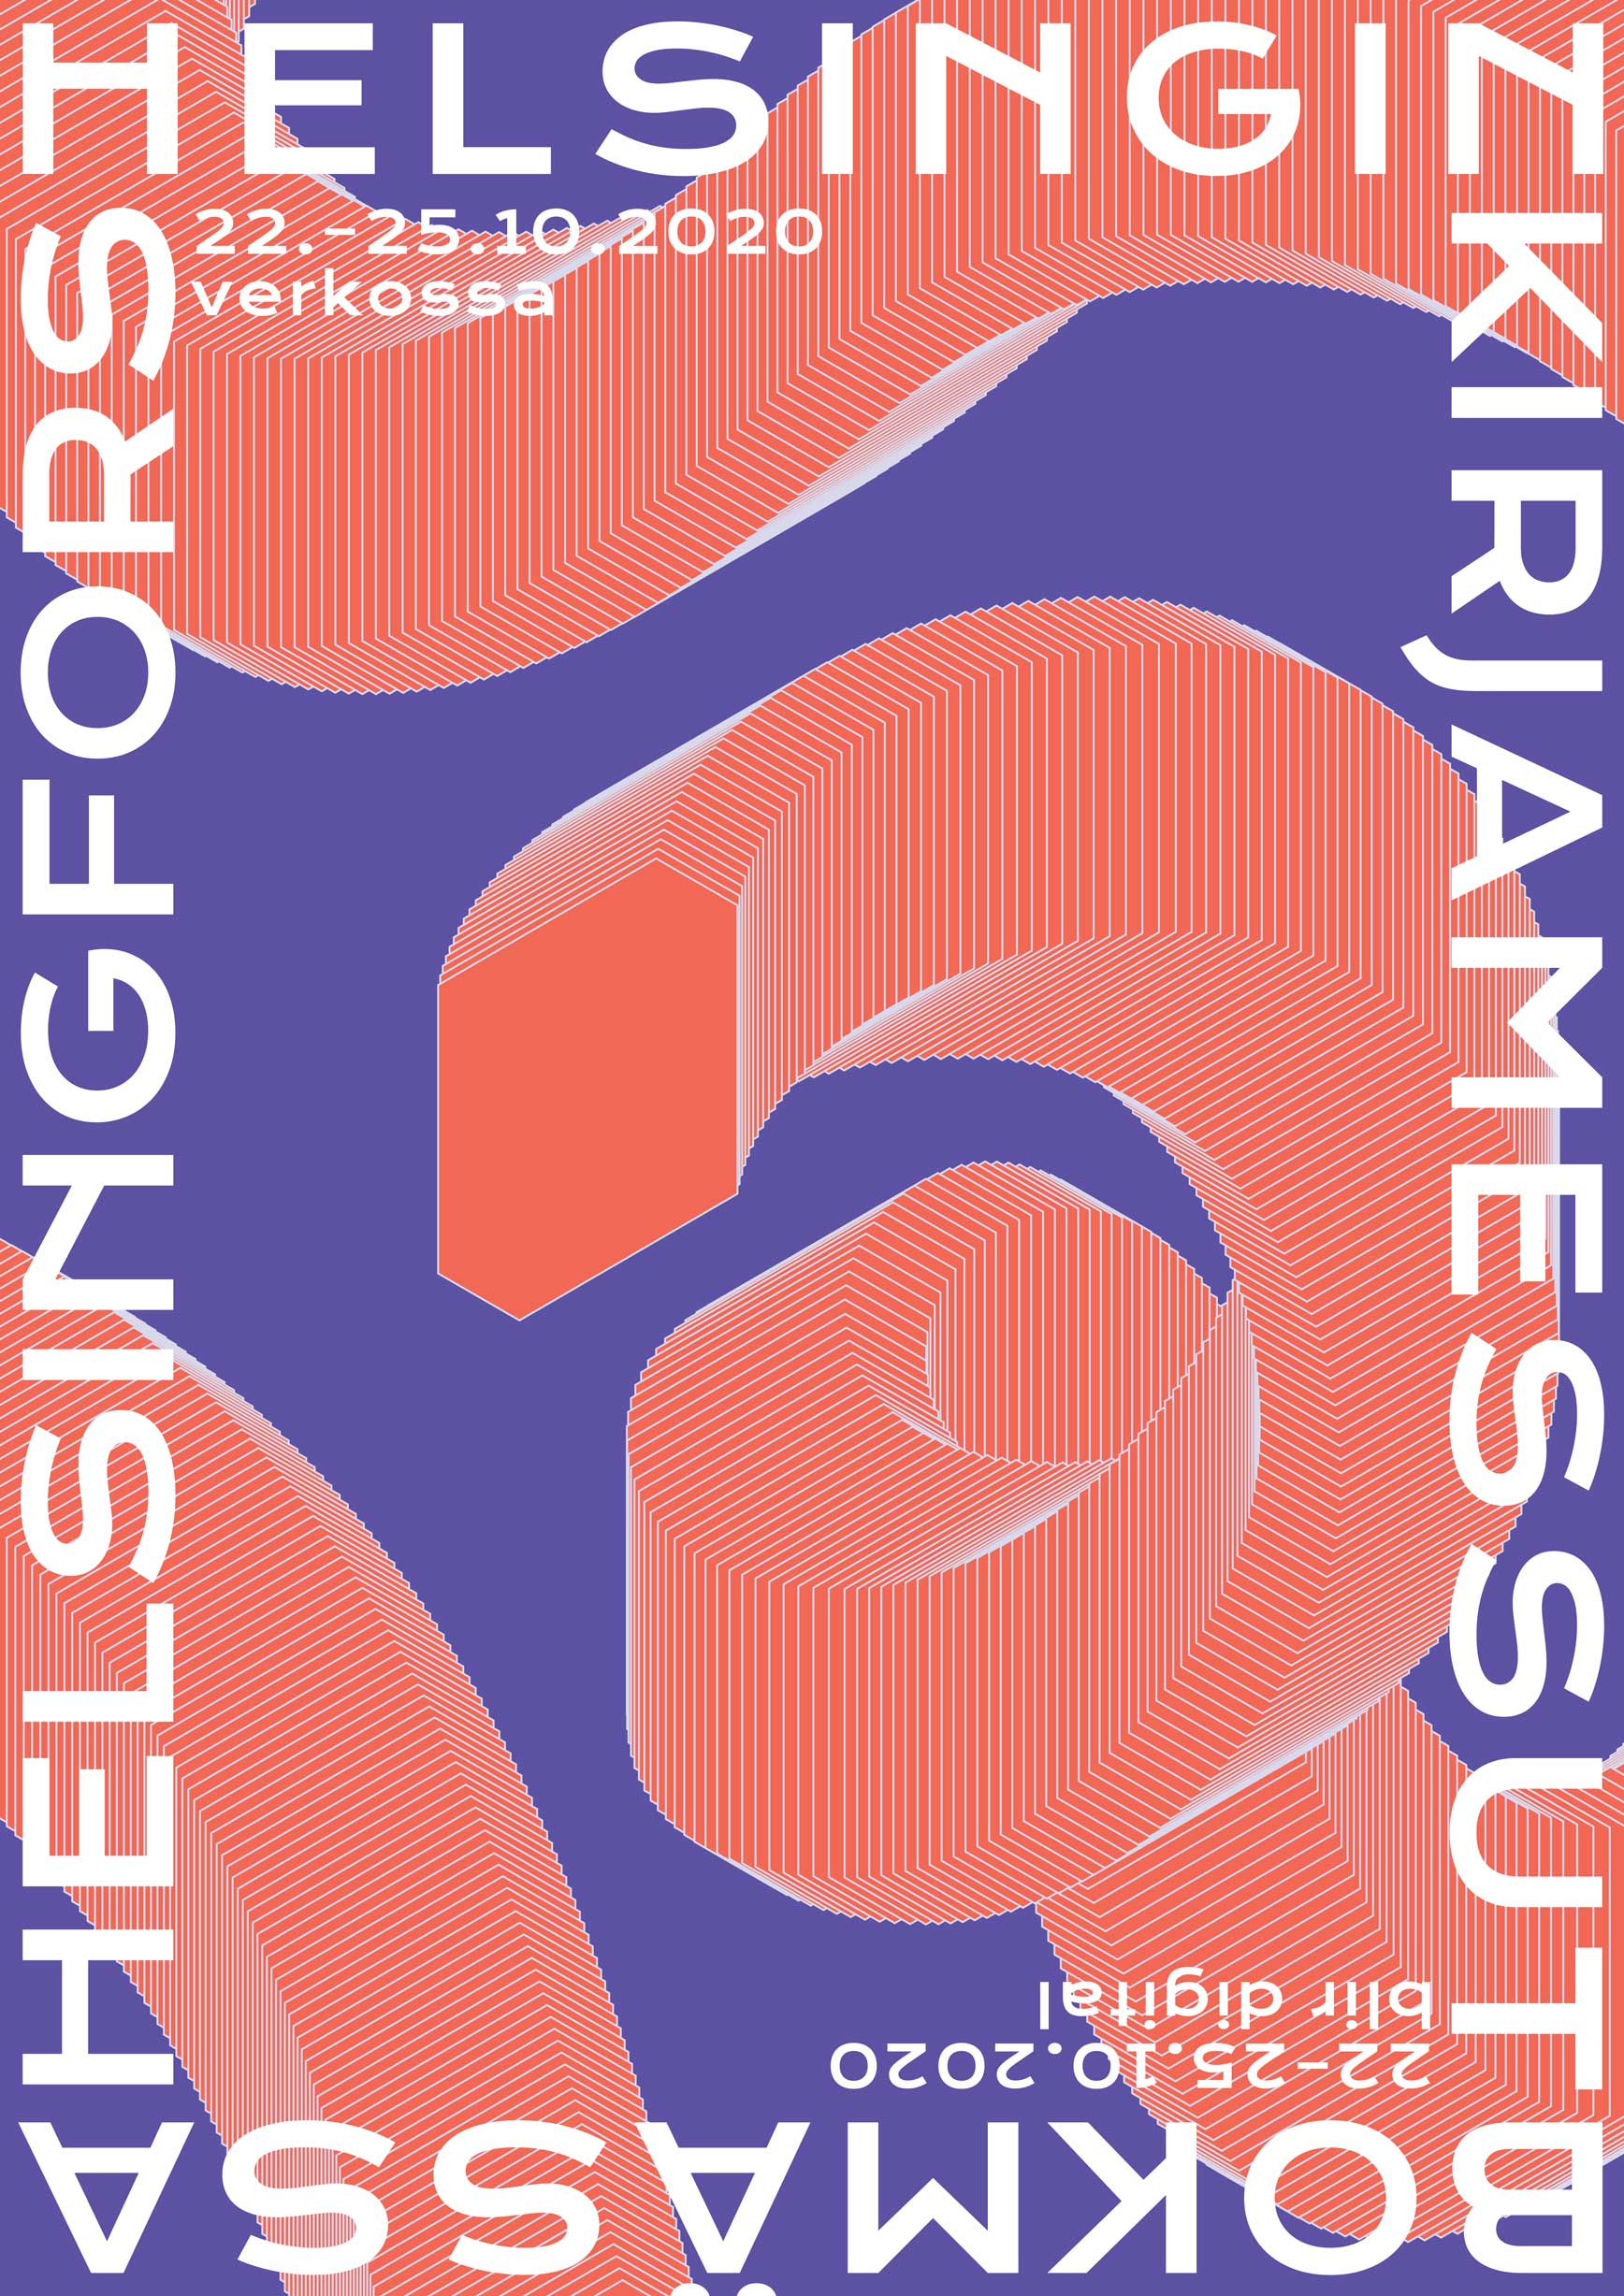 Helsingin kirjamessut 2020 poster designed by Tero Ahonen, Helsinki